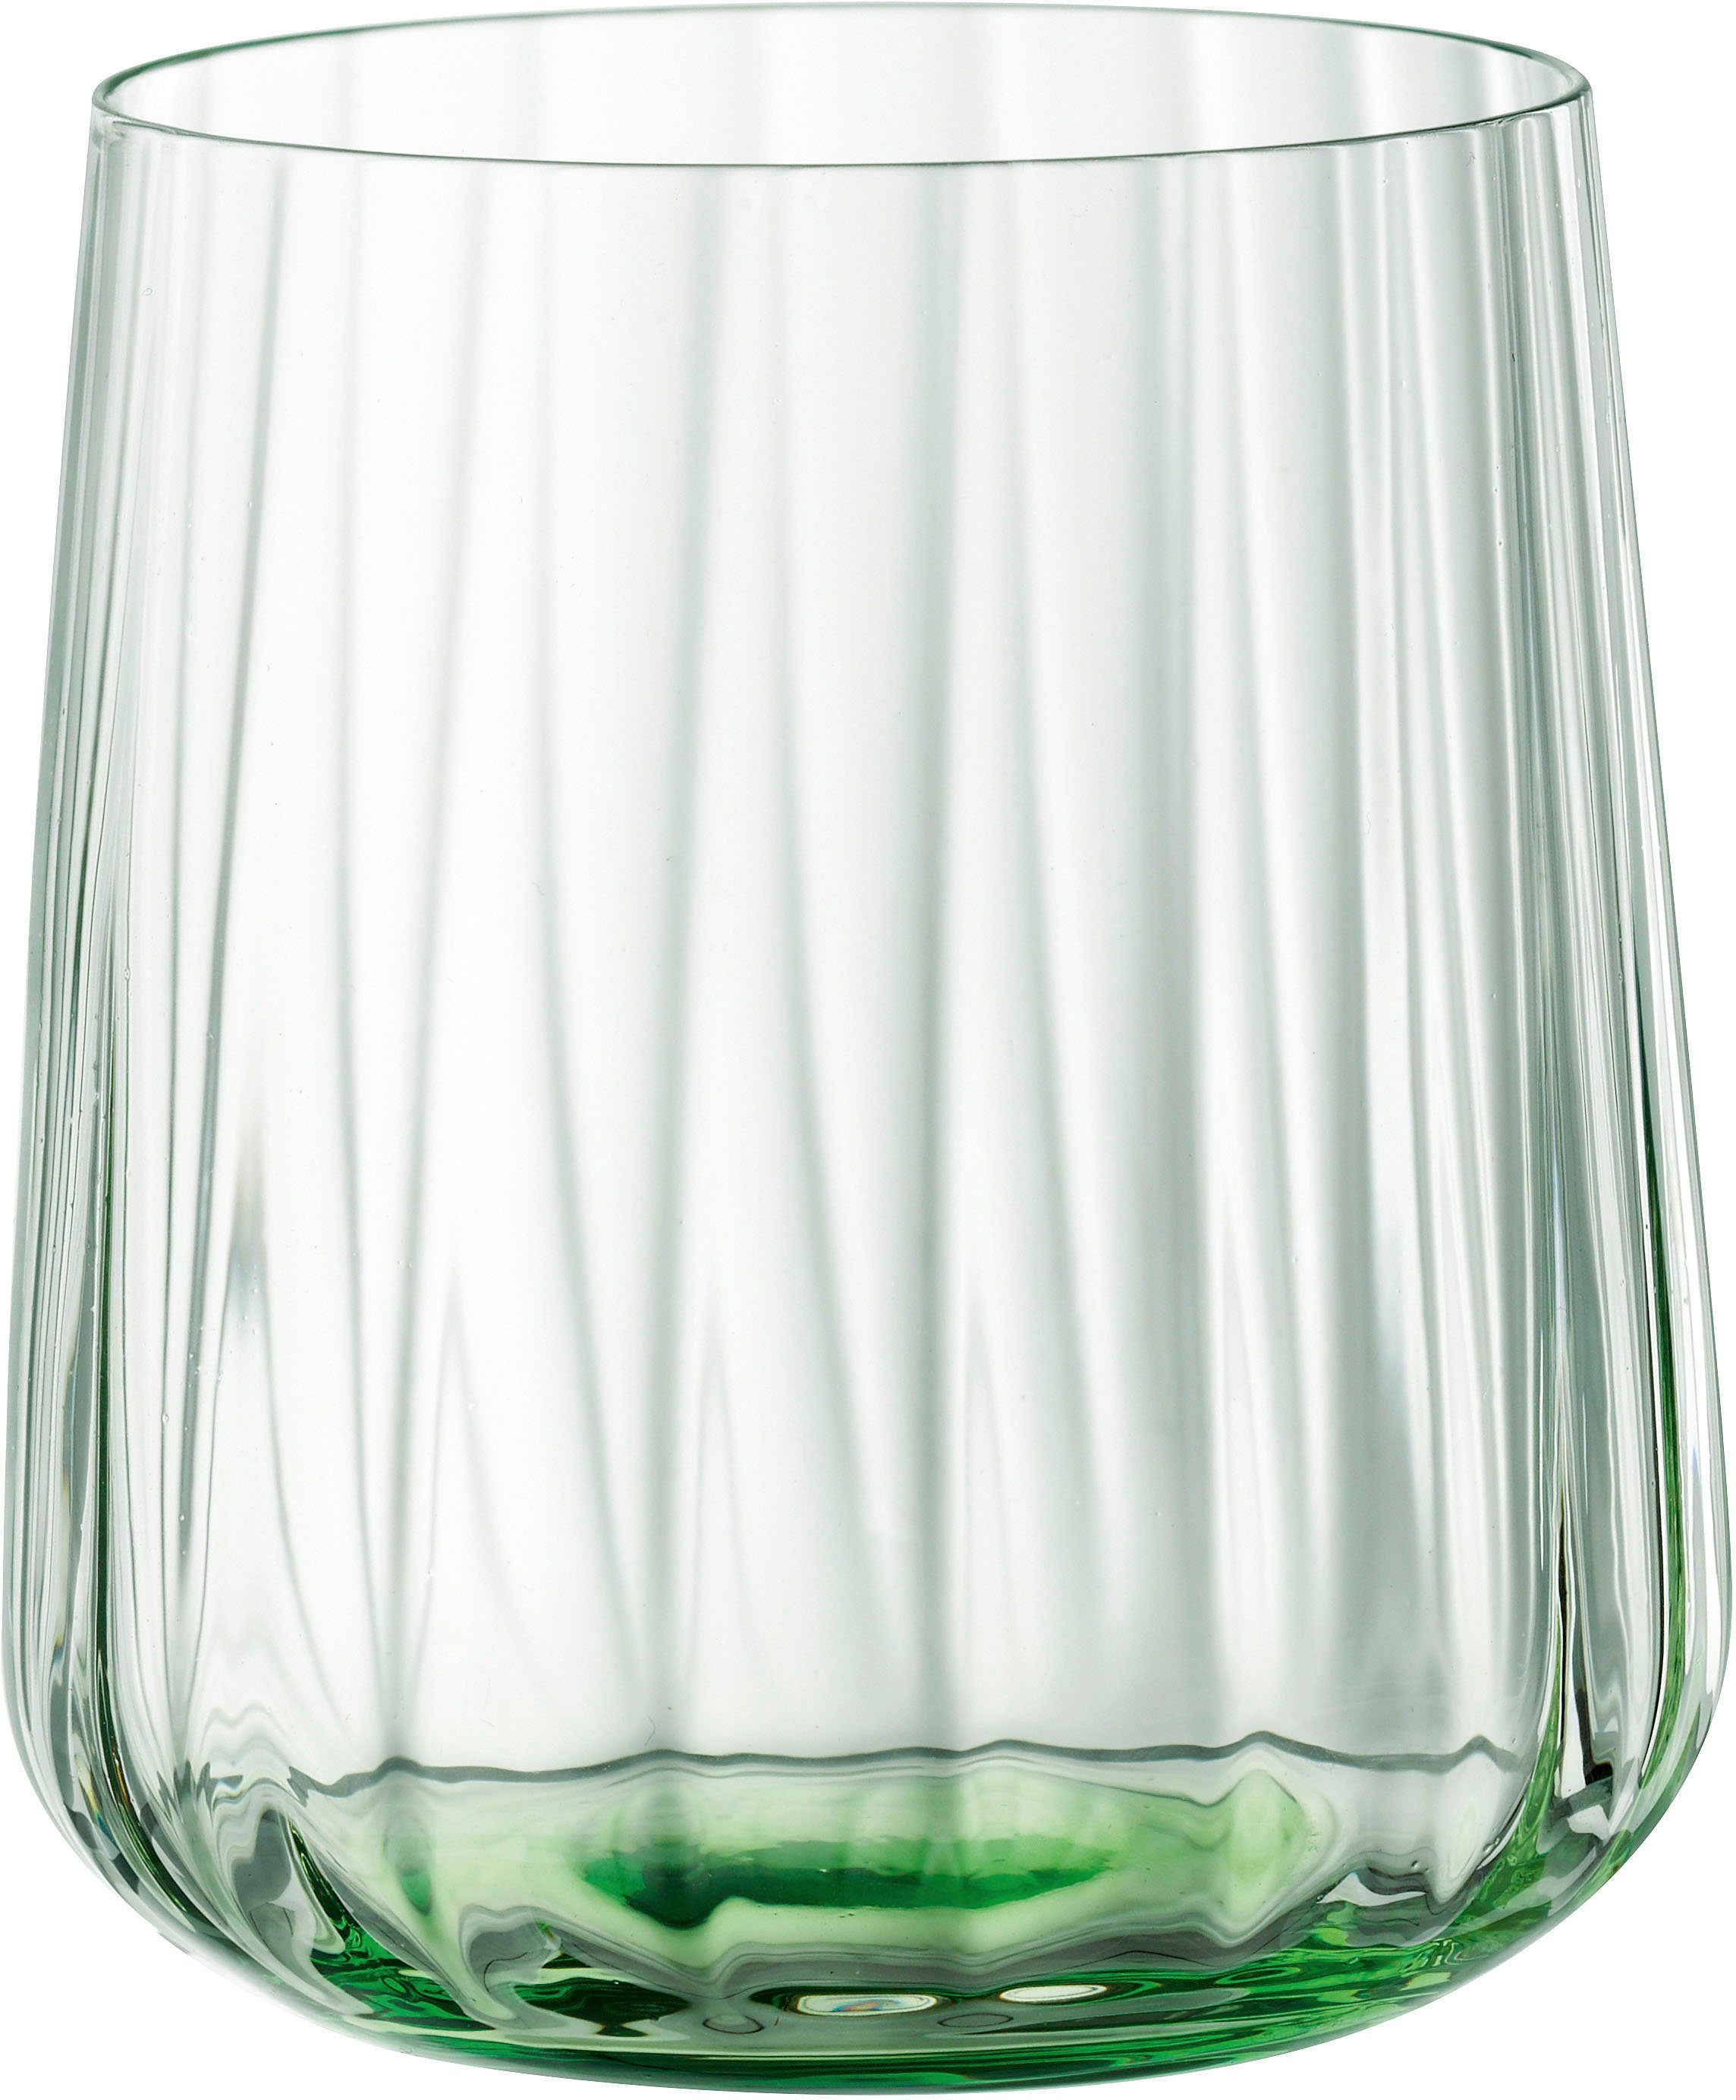 SPIEGELAU Becher LifeStyle, Kristallglas, 340 ml, 2-teilig leaf